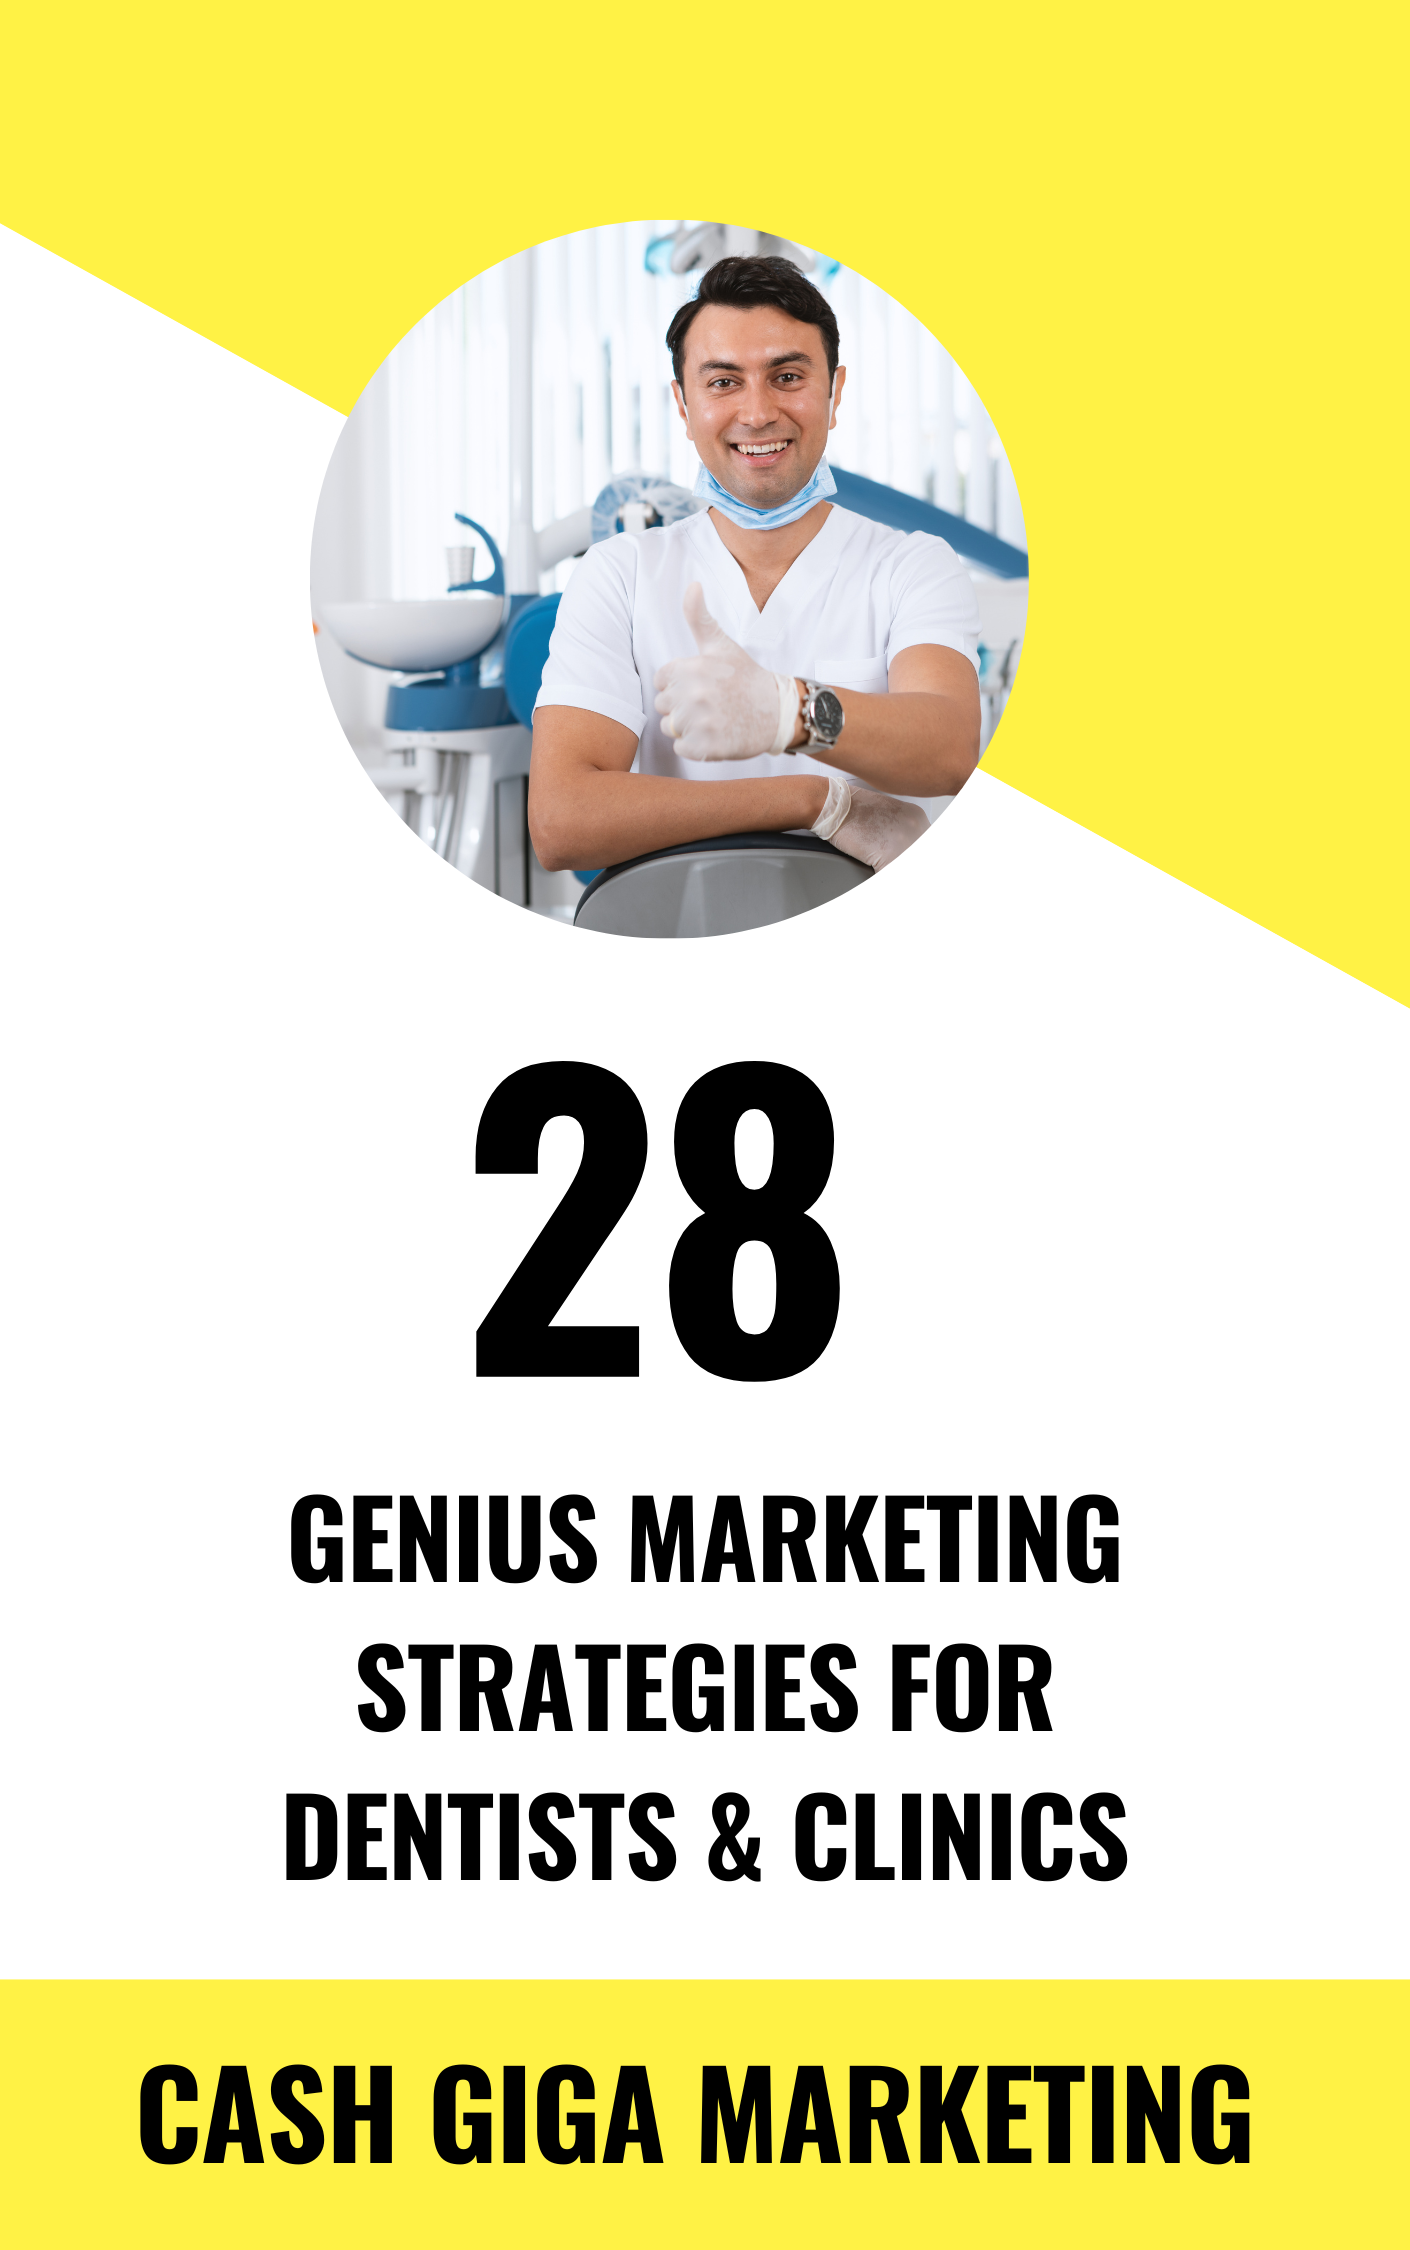 genius-marketing-strategies-for-dentals